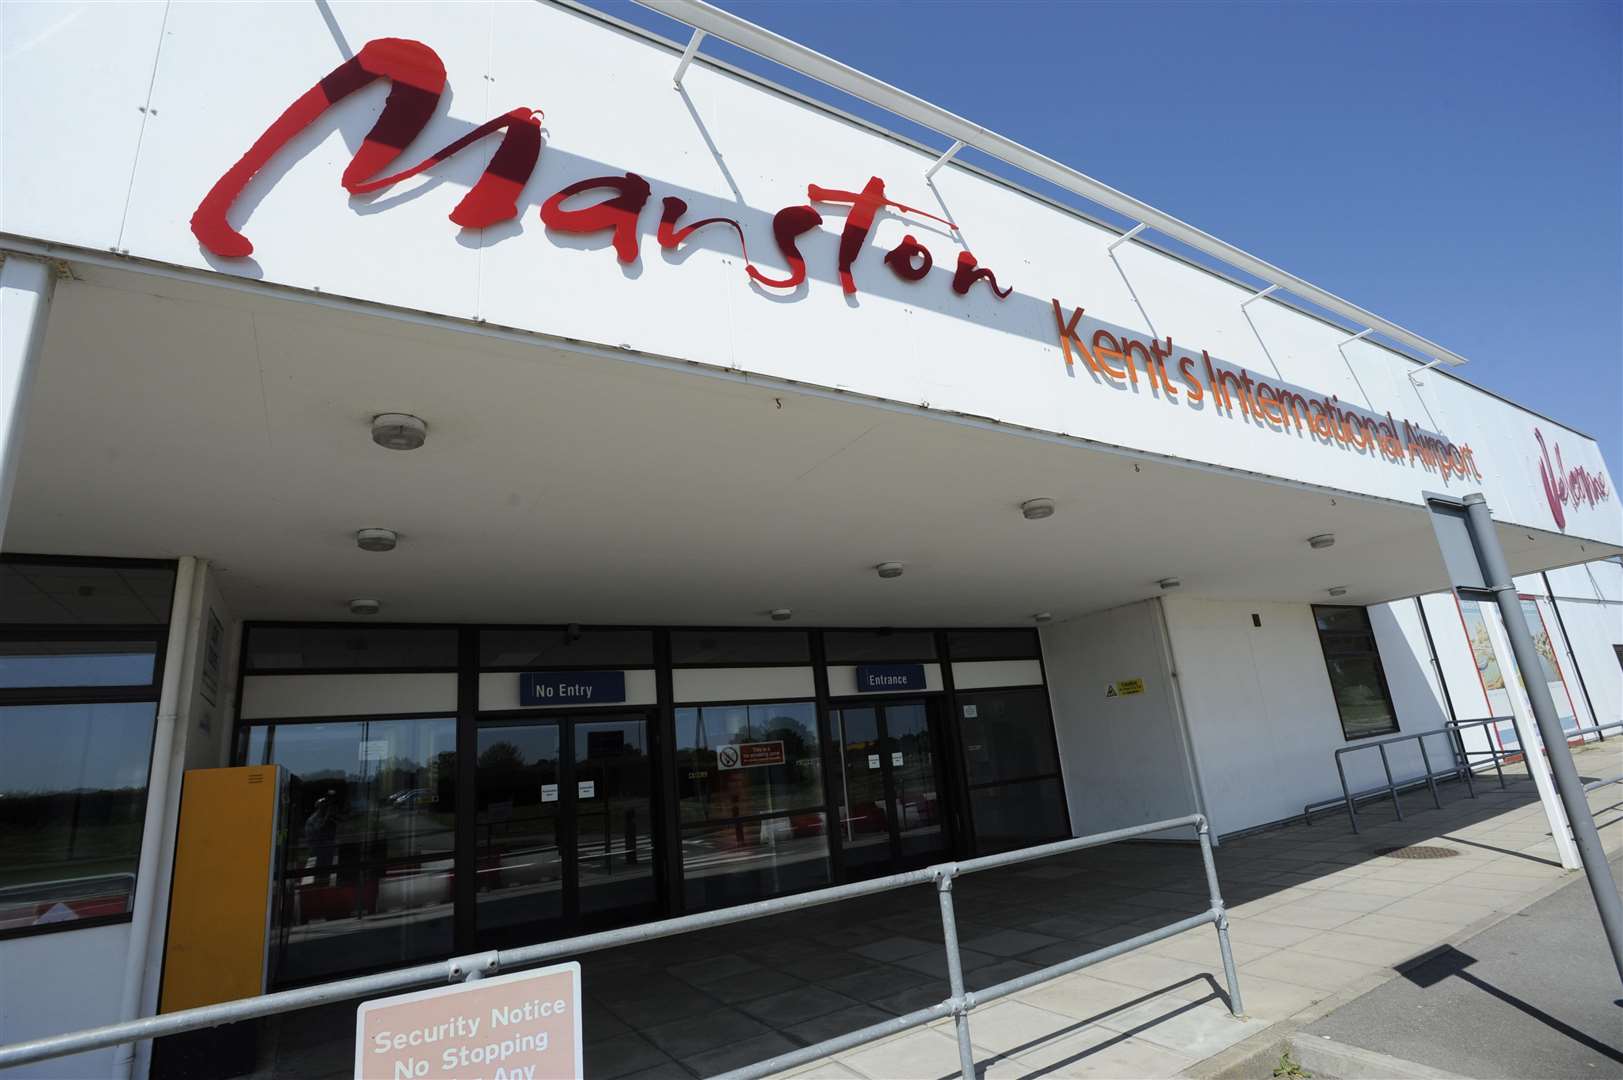 Manston airport has been shut